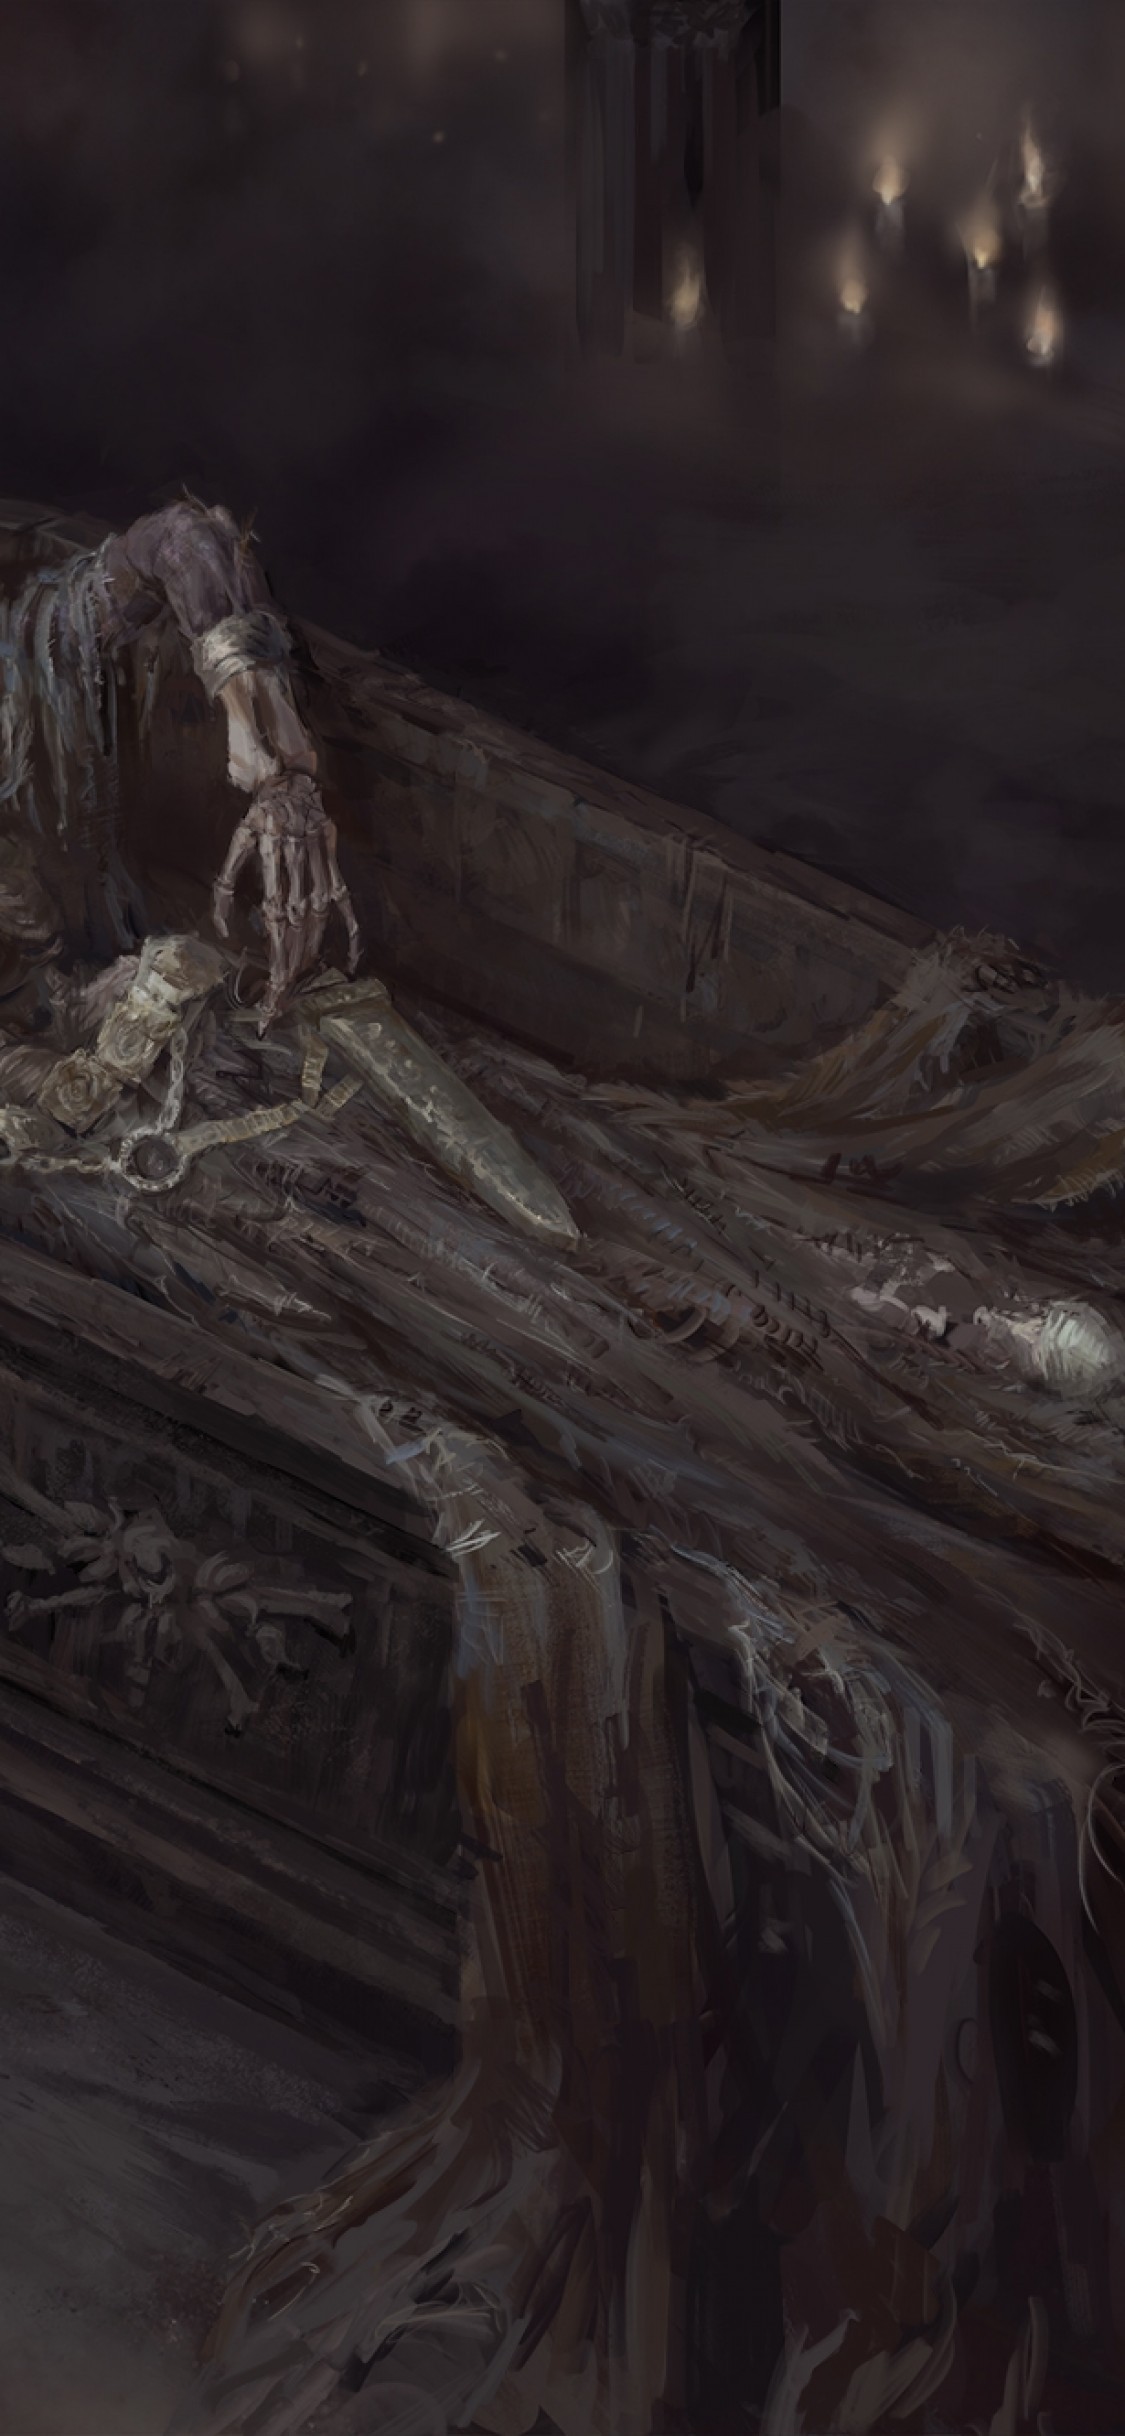 Skeleton, Coffin, Horror, Scary, Crown, Underground - Scary Desktop Wallpaper Hd - HD Wallpaper 